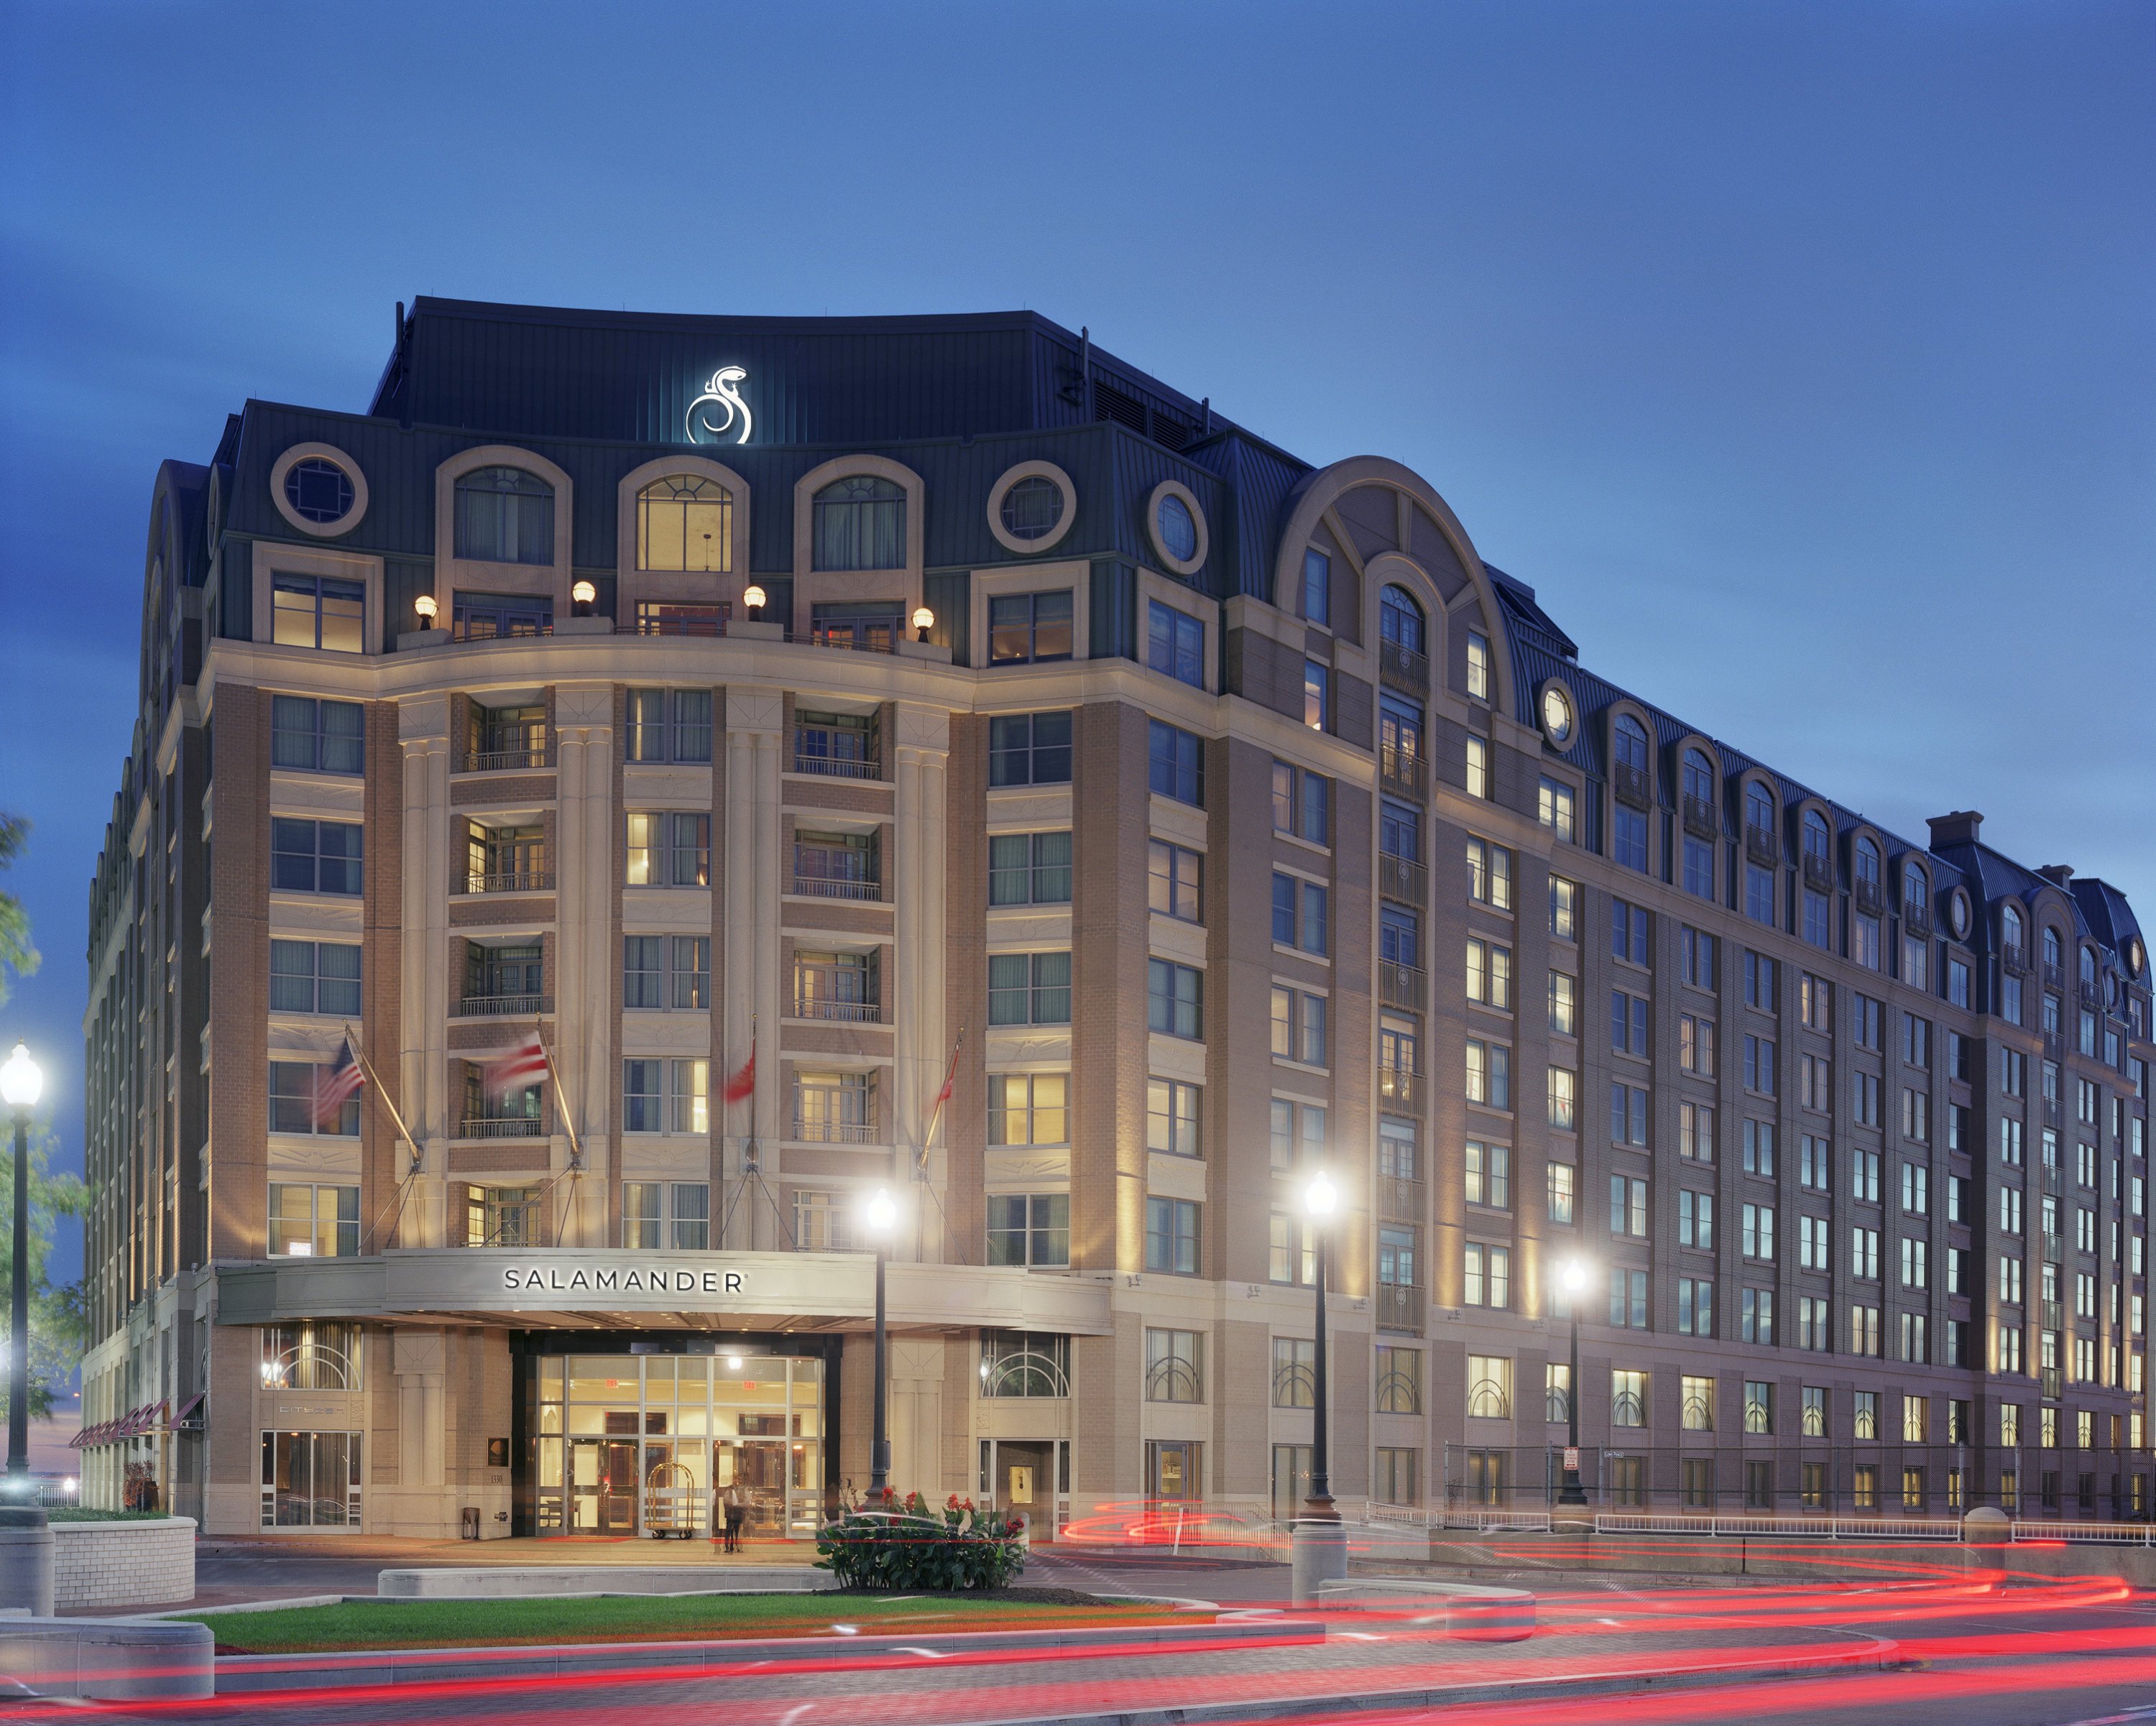 Best Hotels in Washington, DC Salamander DC